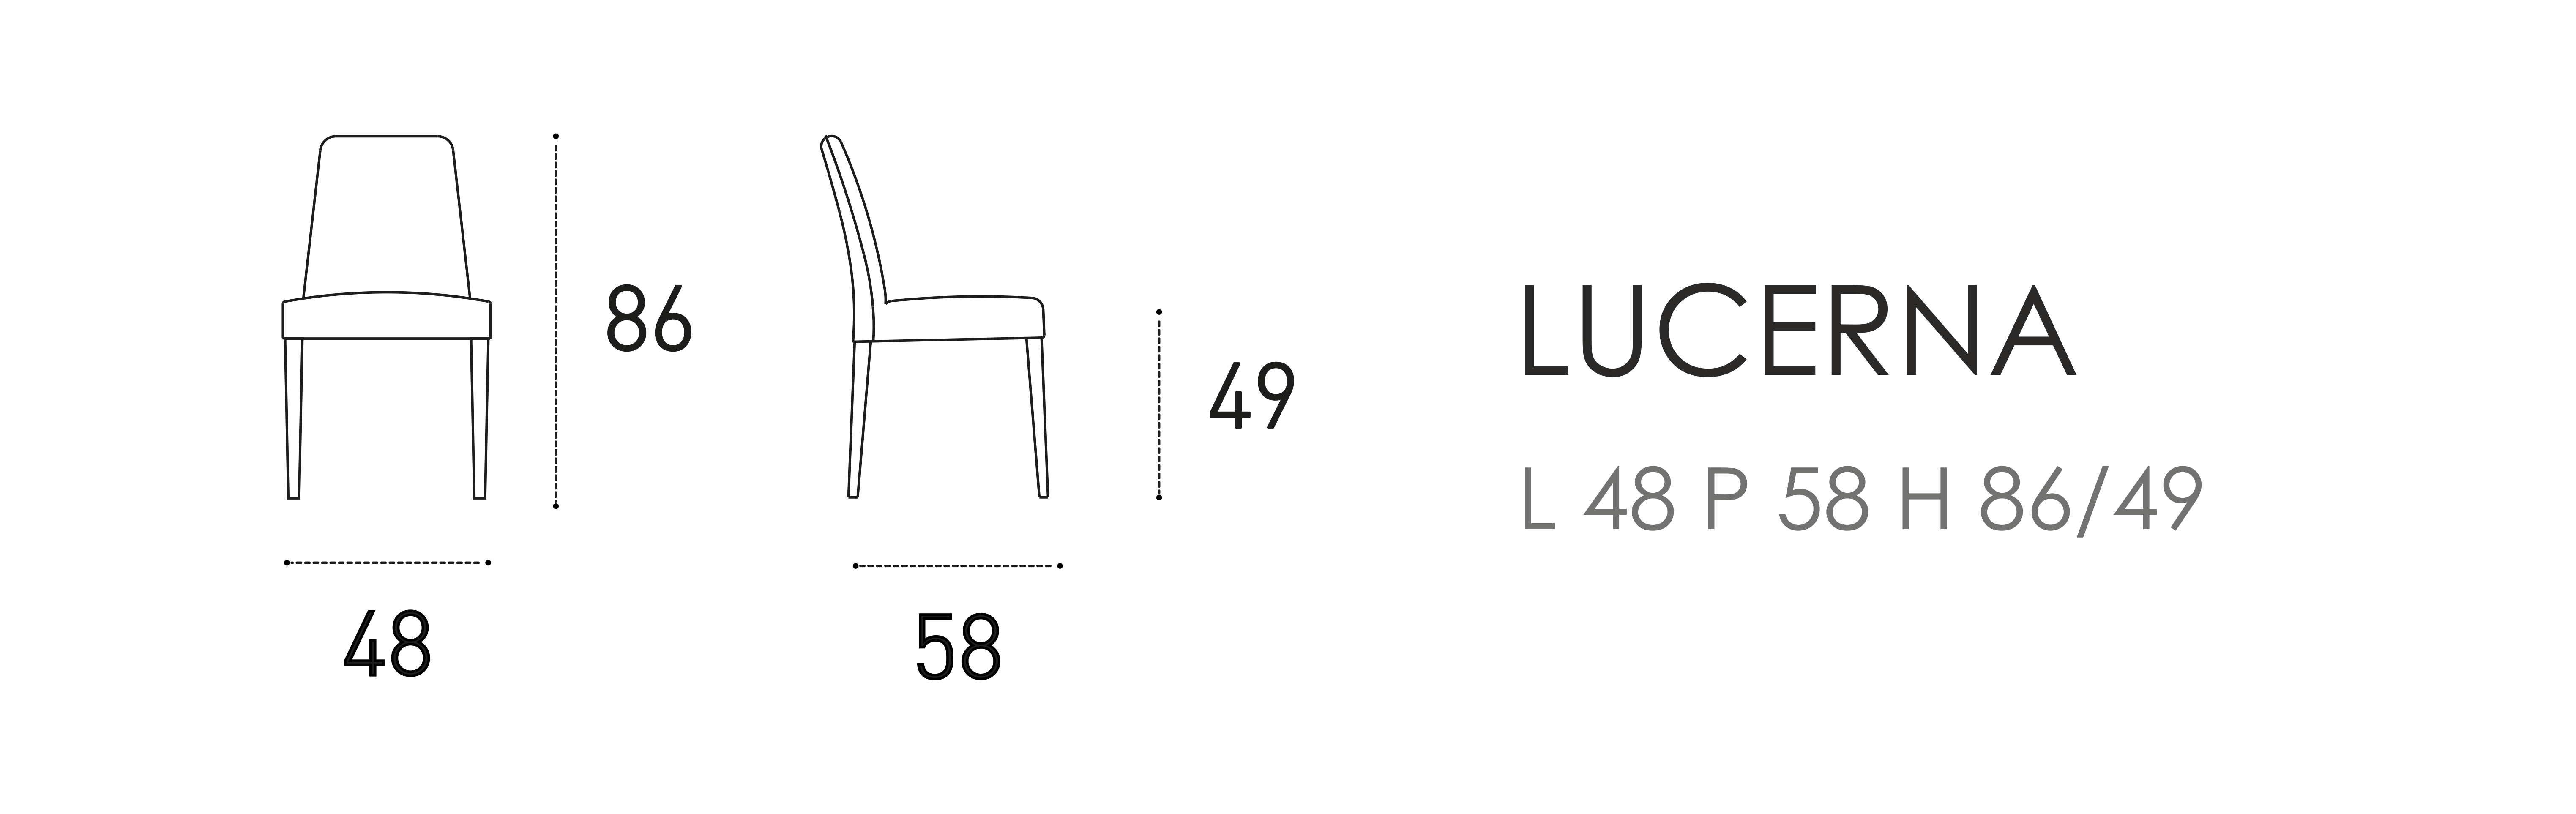 Lucerna L 48 P 58 H 86/49